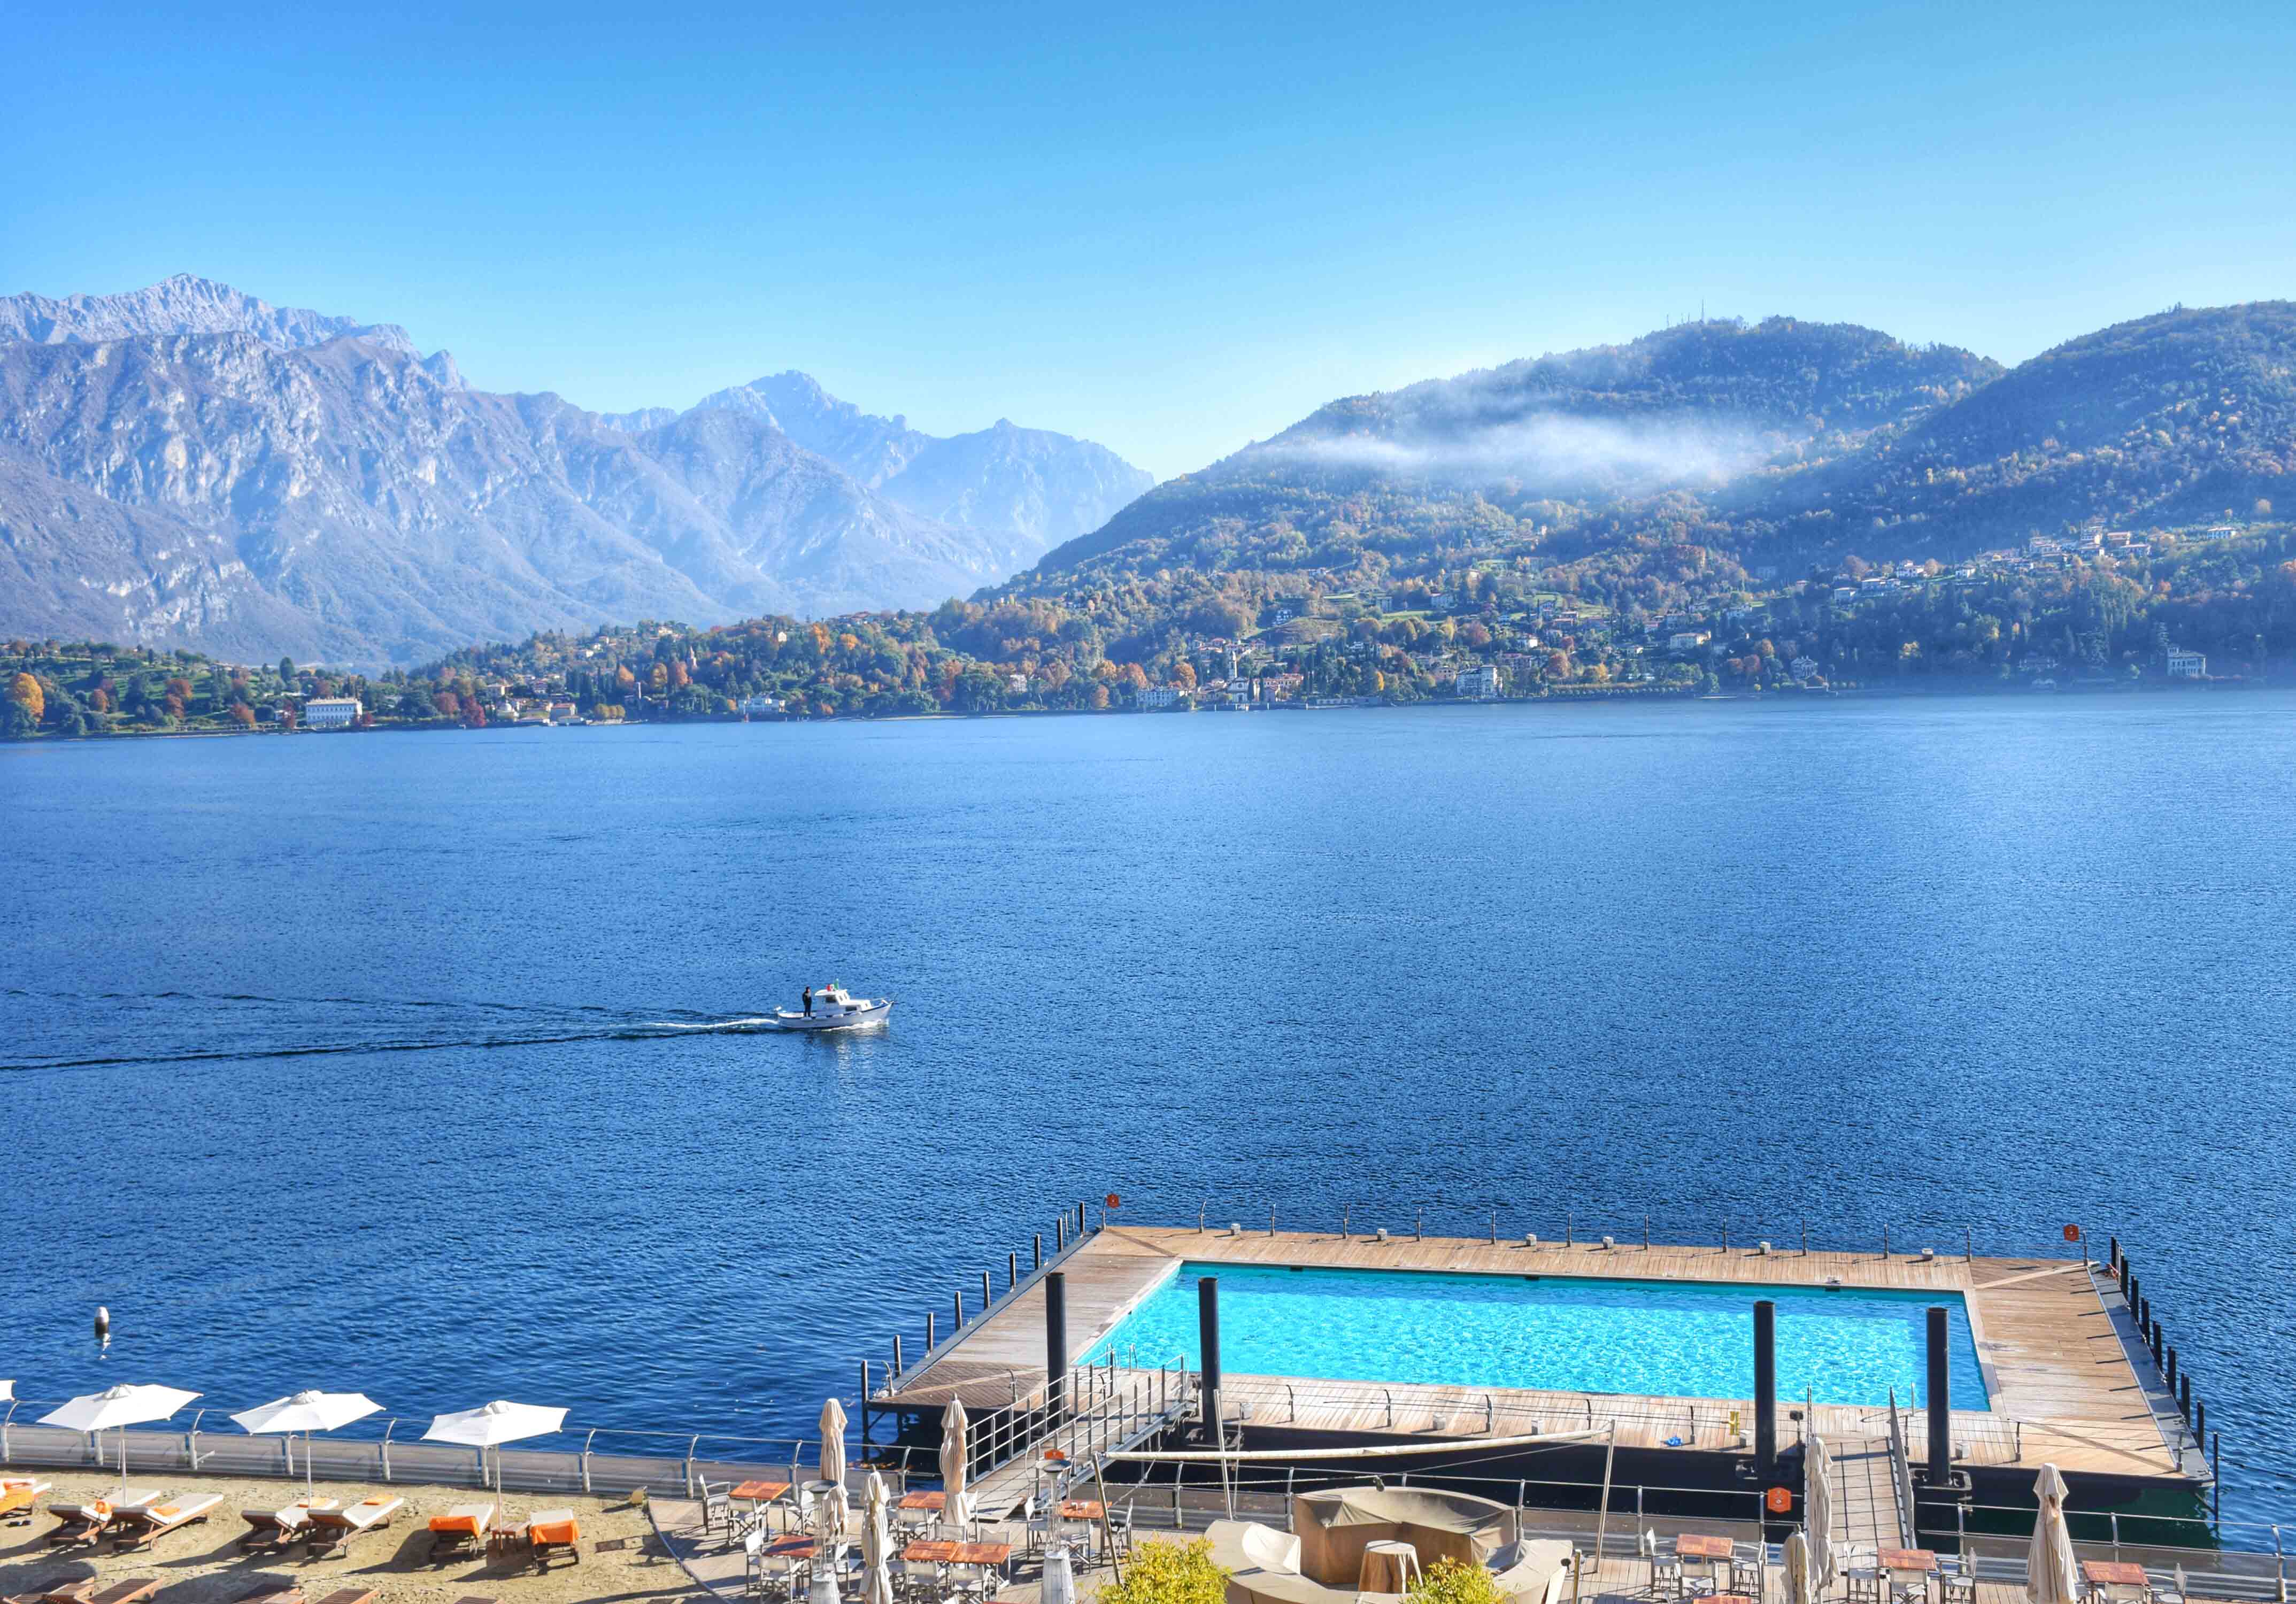 Vista das janelas do Grand Hotel Tremezzo no Lago di Como, Itália | foto: Lala Rebelo